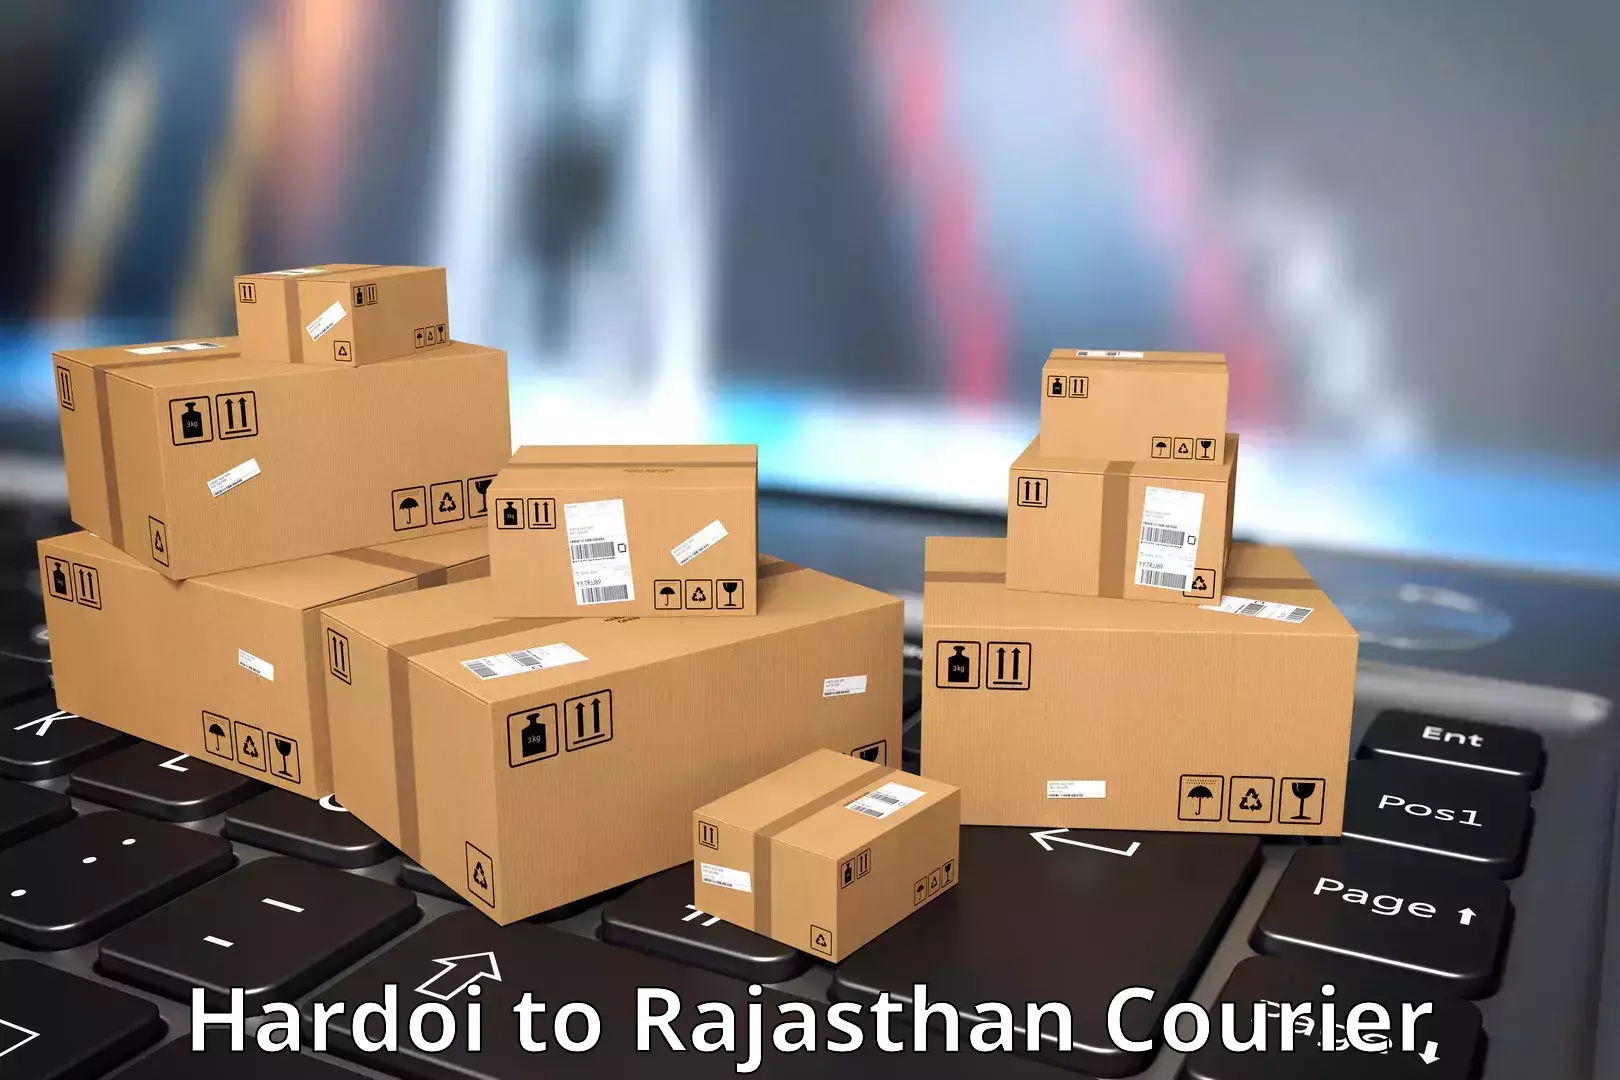 Specialized shipment handling Hardoi to Alwar